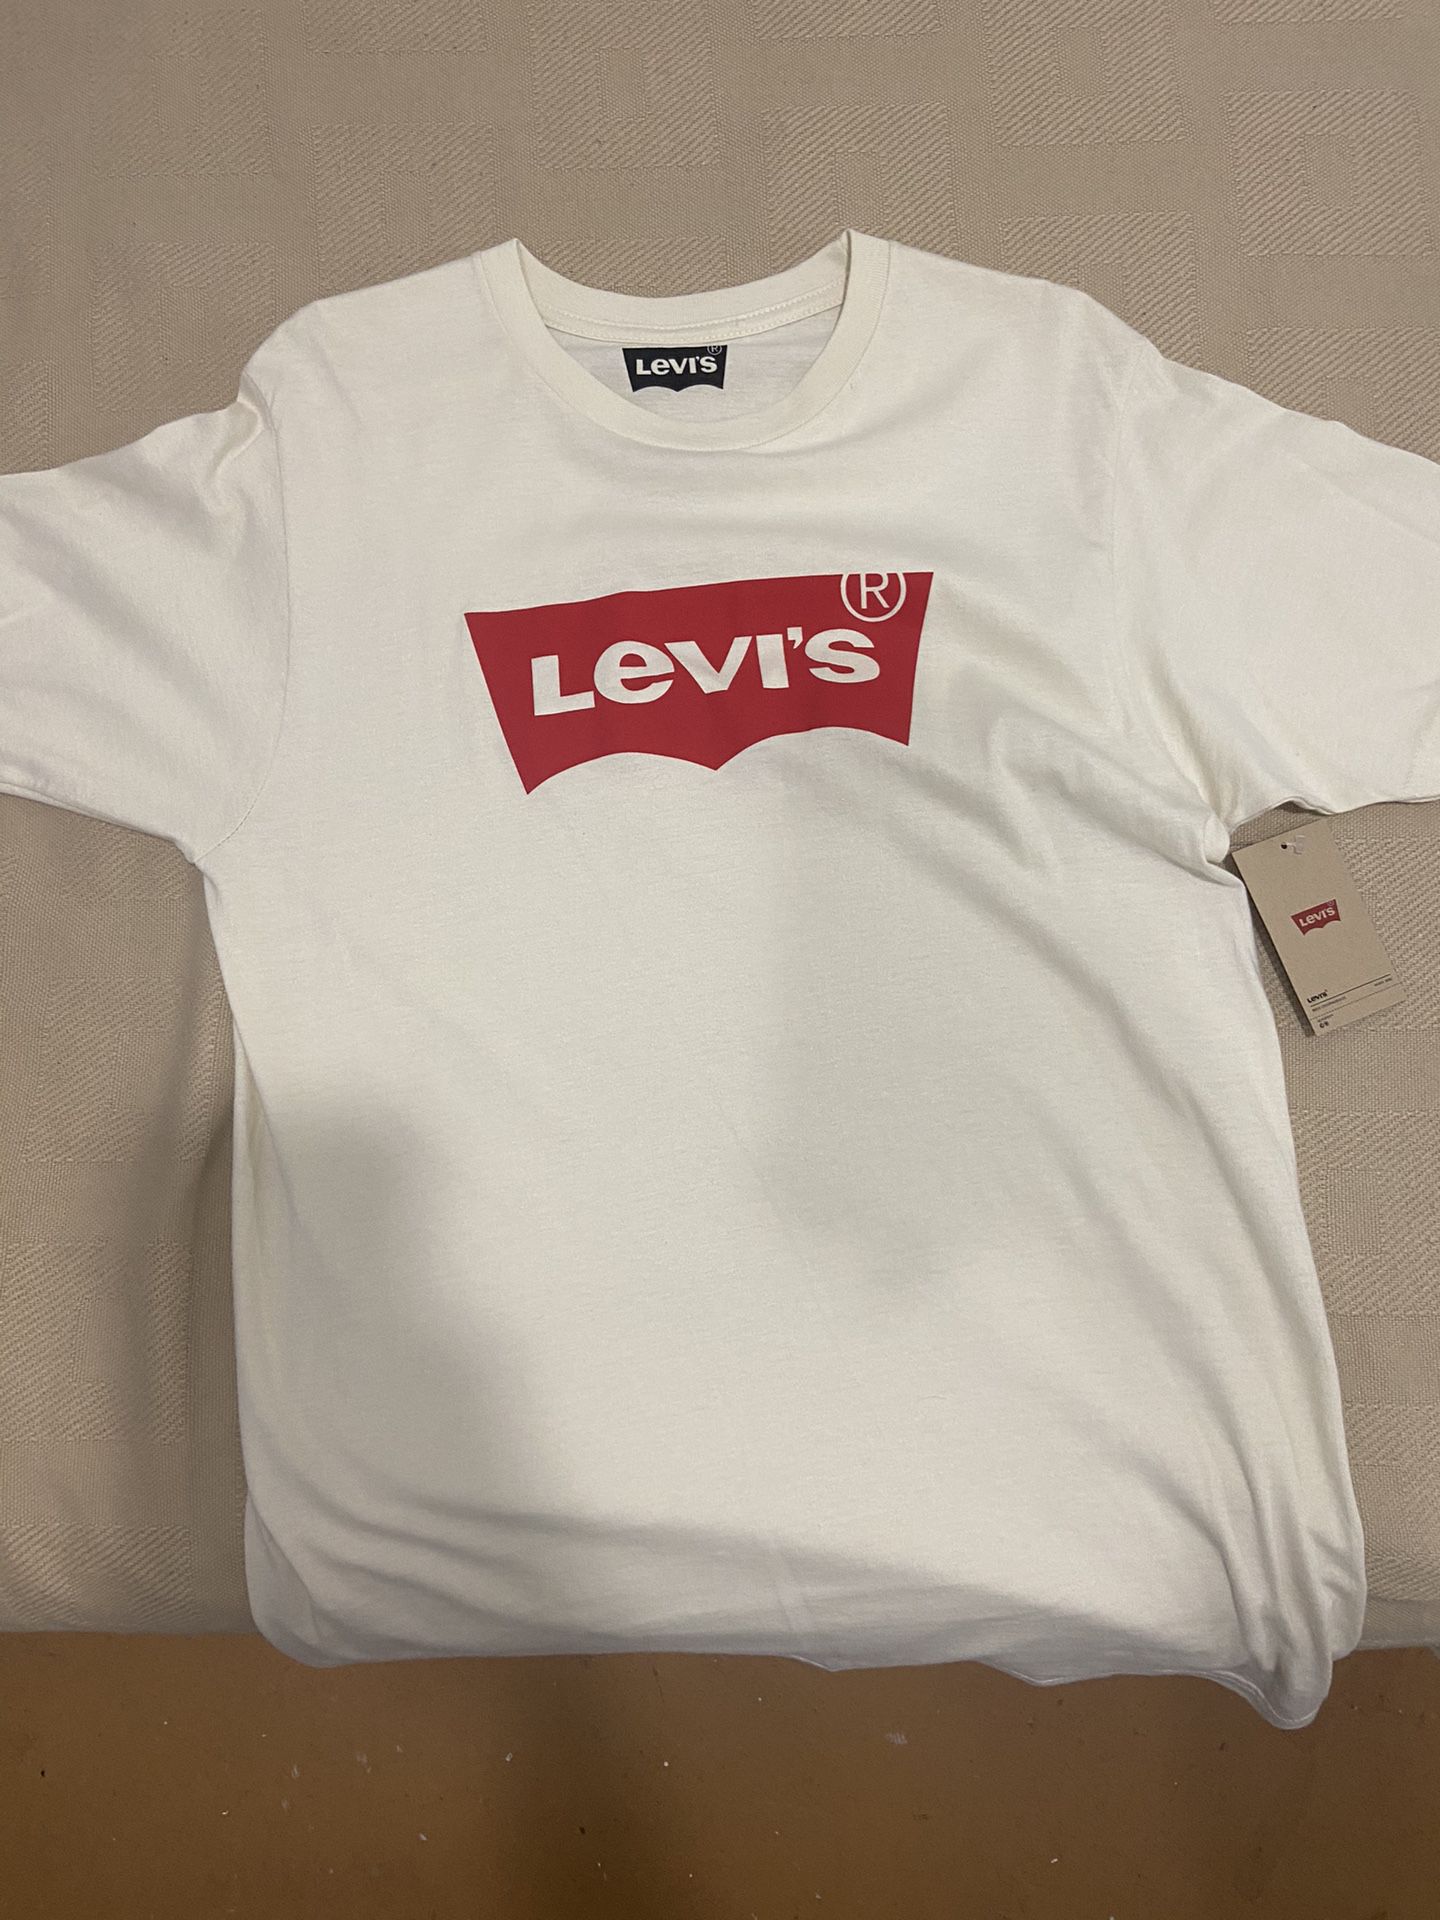 Brand new levis shirt size M